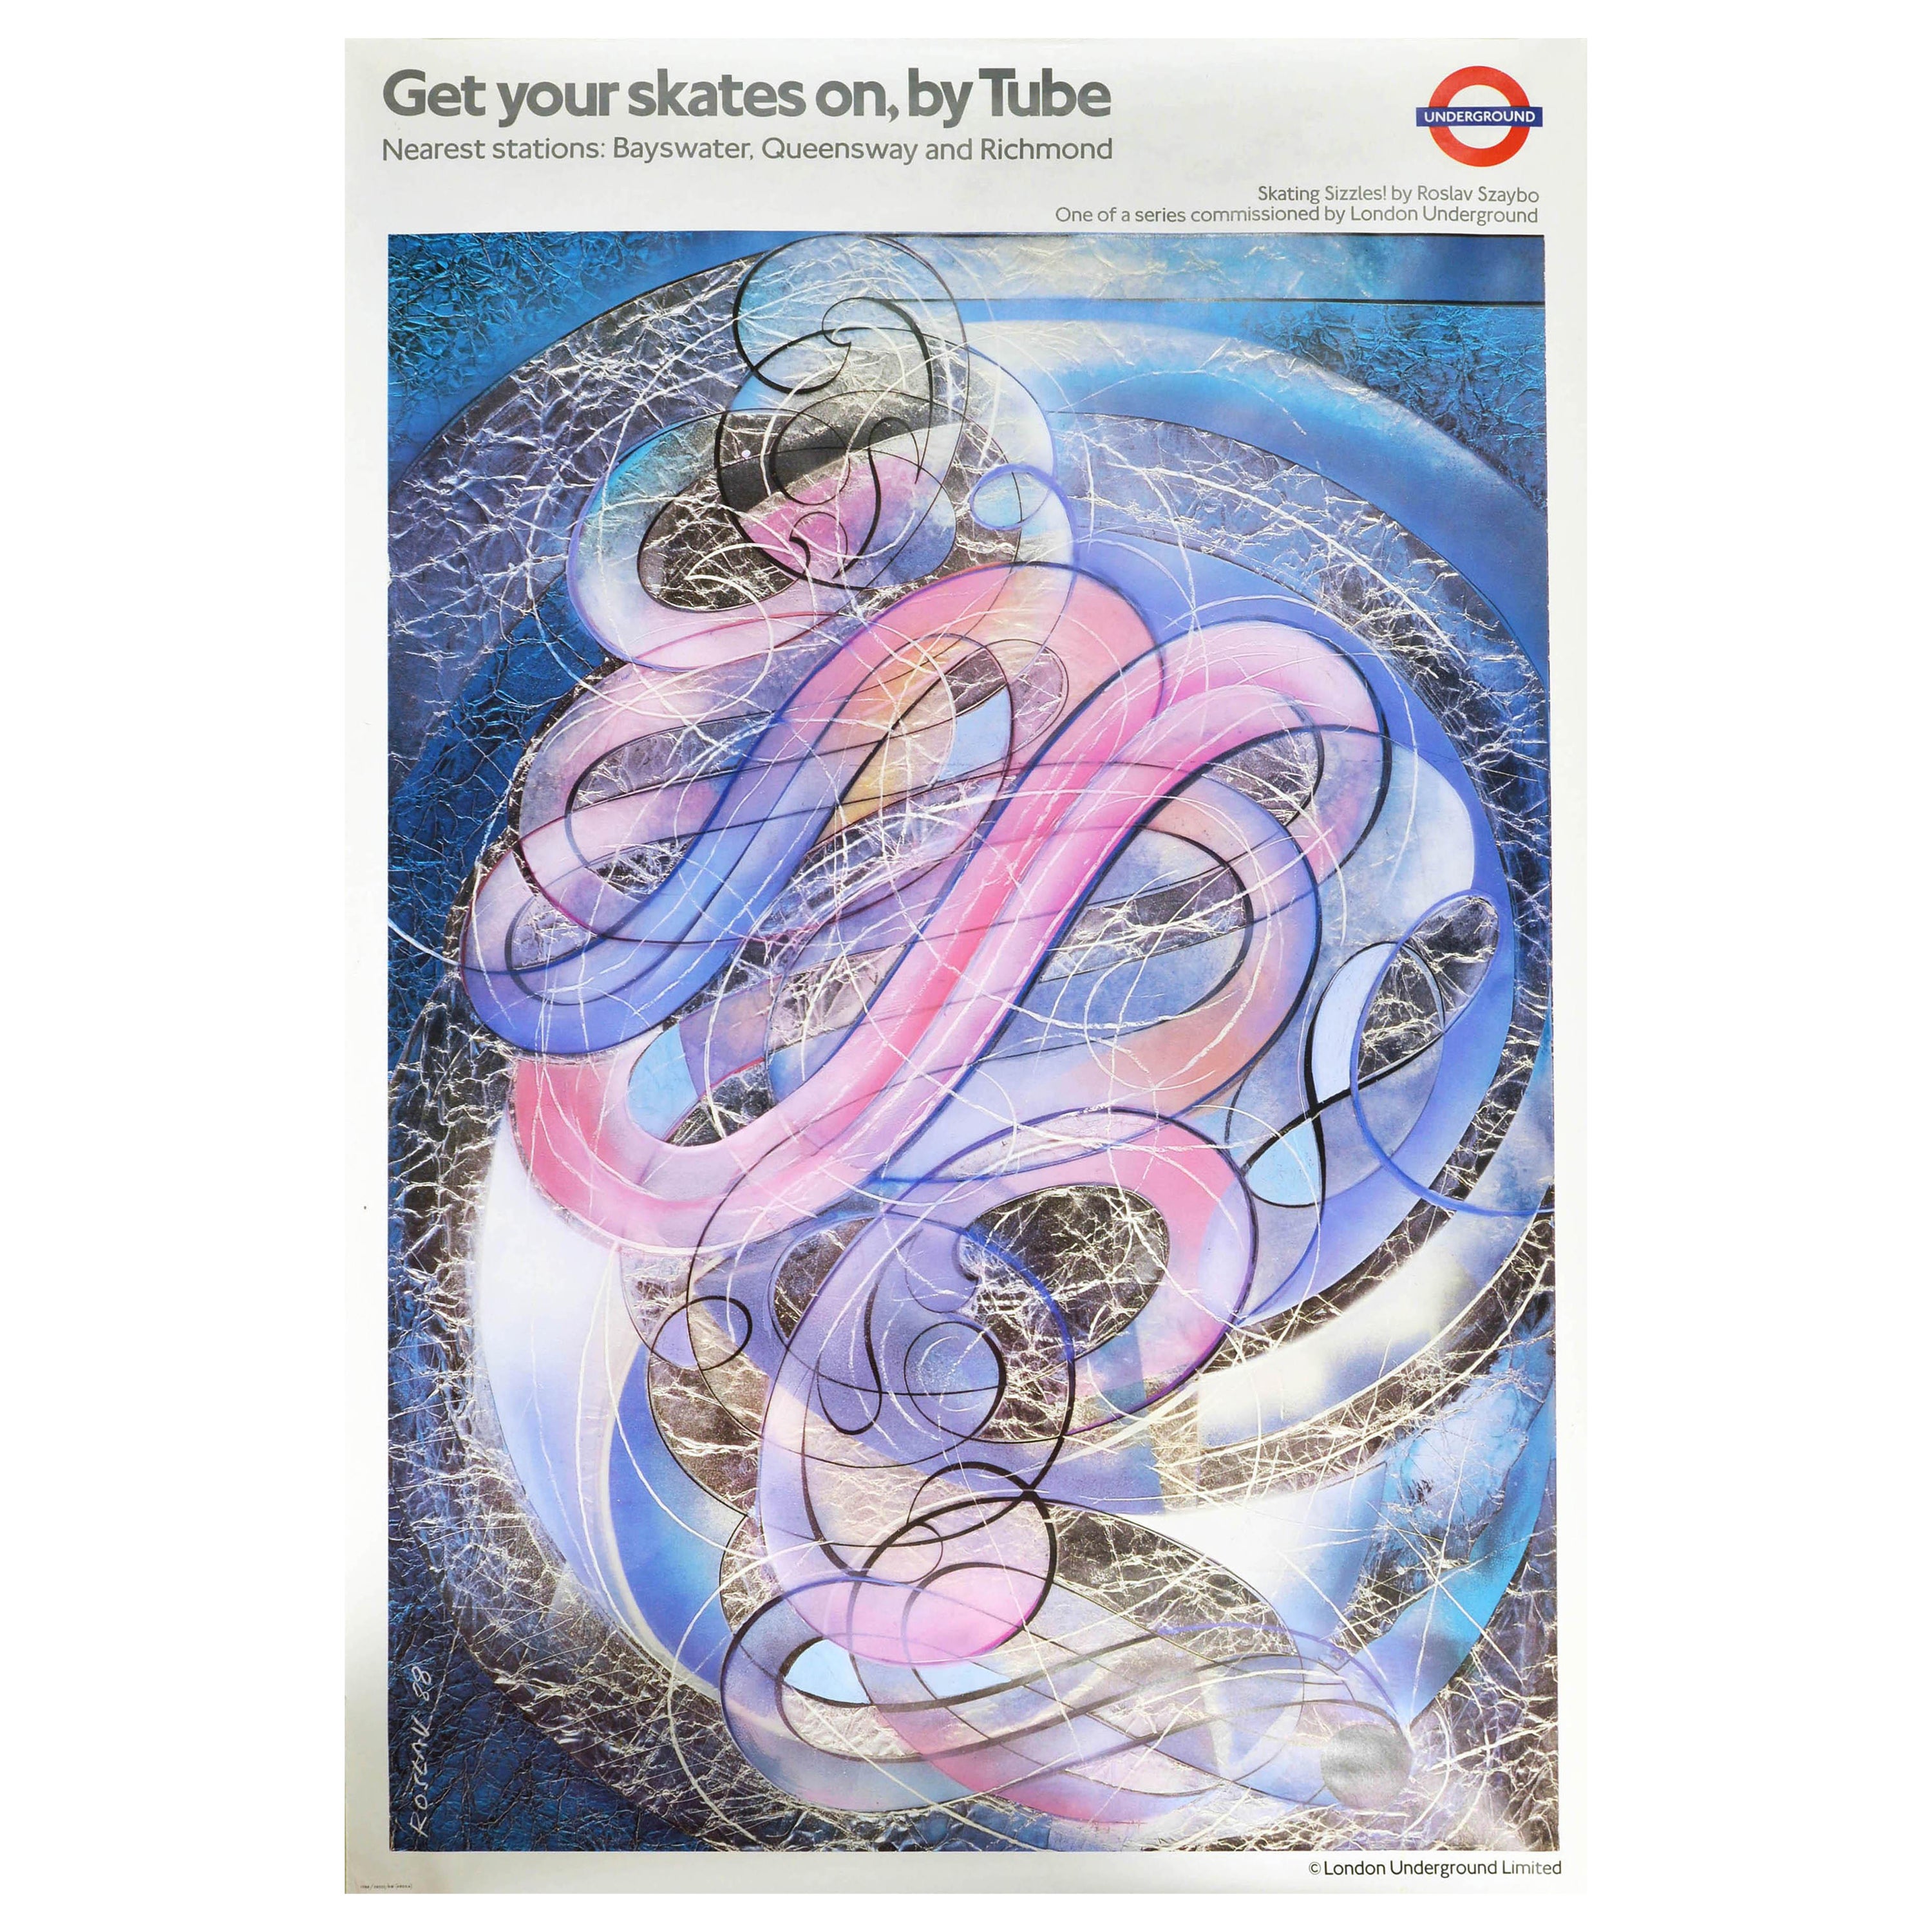 Original Vintage London Underground Poster Get Your Skates On Roslav Szaybo Art For Sale